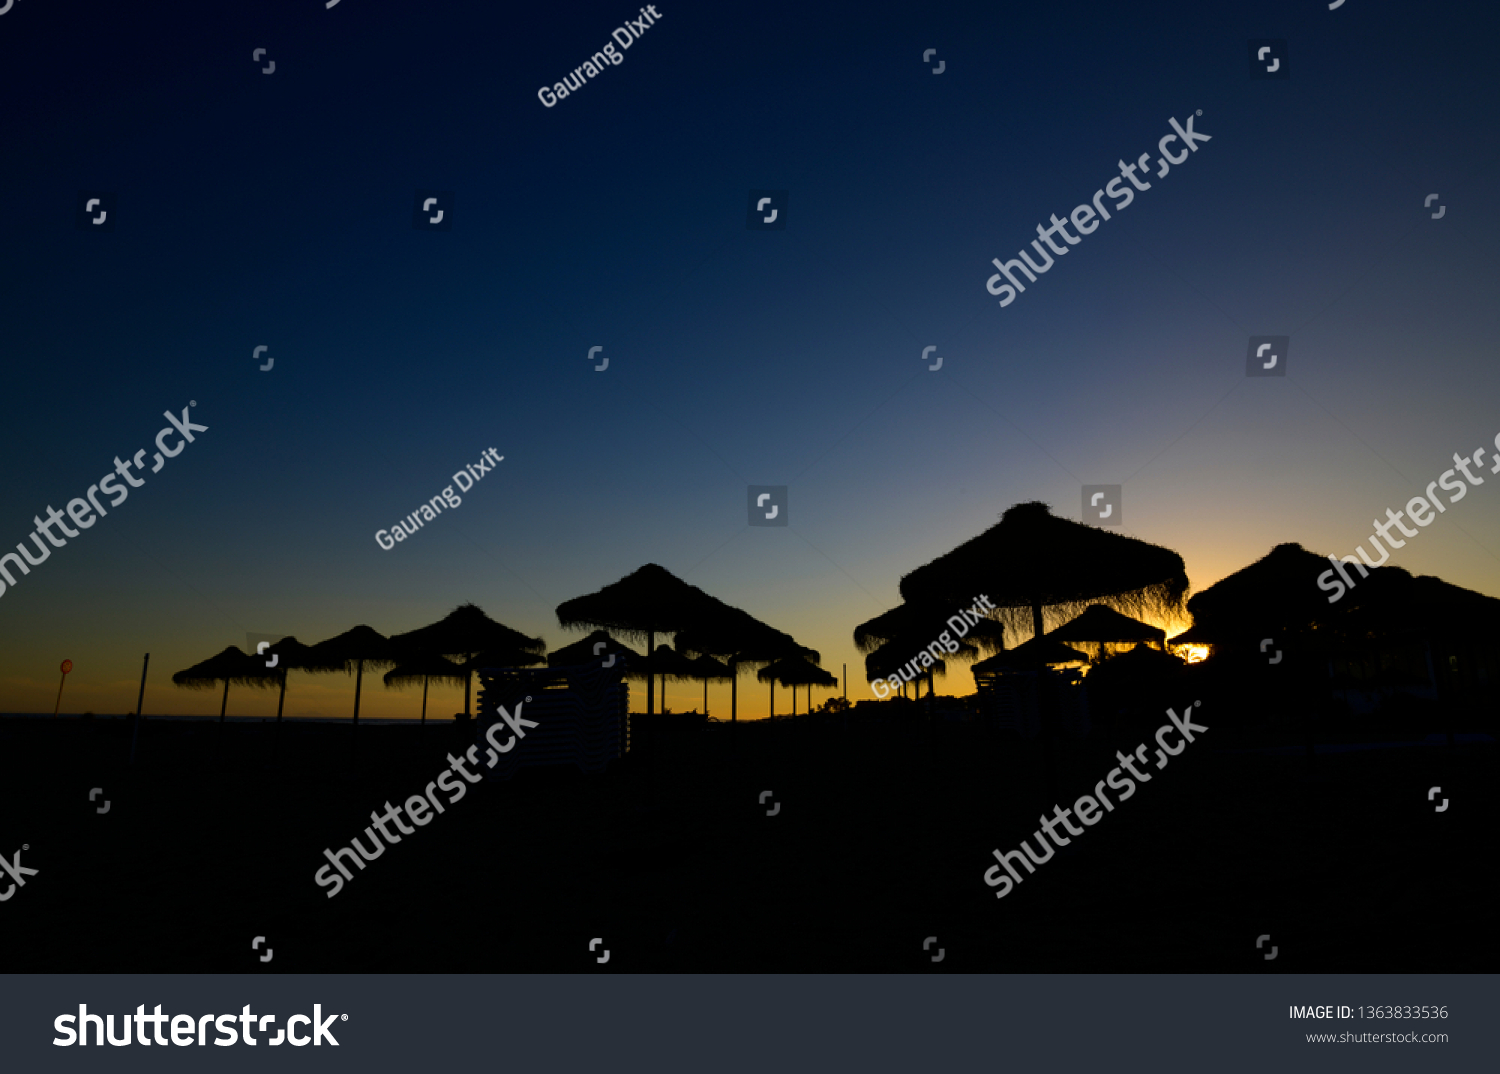 Cabana on the beach of Puerto Banos, Marbella Spain #1363833536